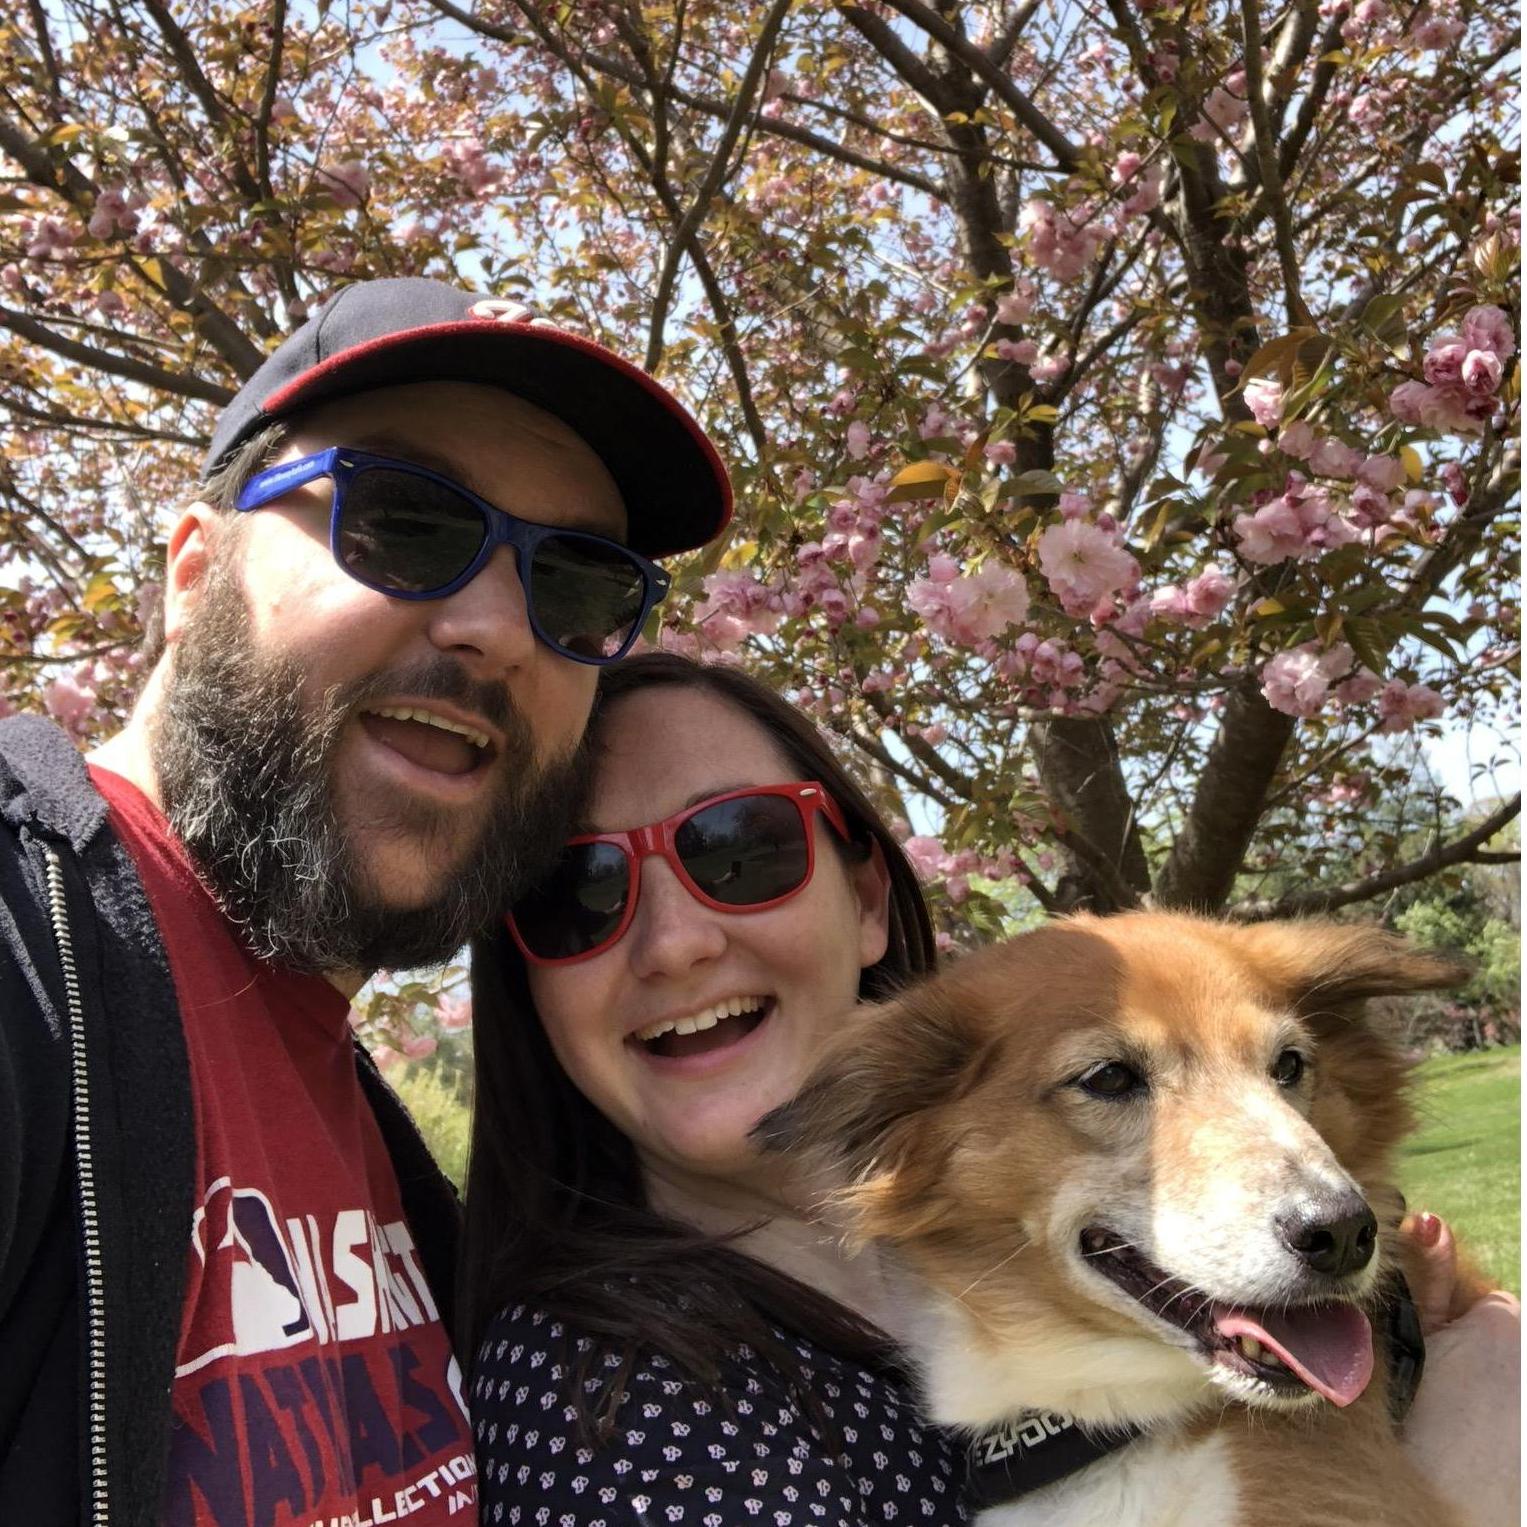 Enjoying Cherry Blossom season in DC 2018